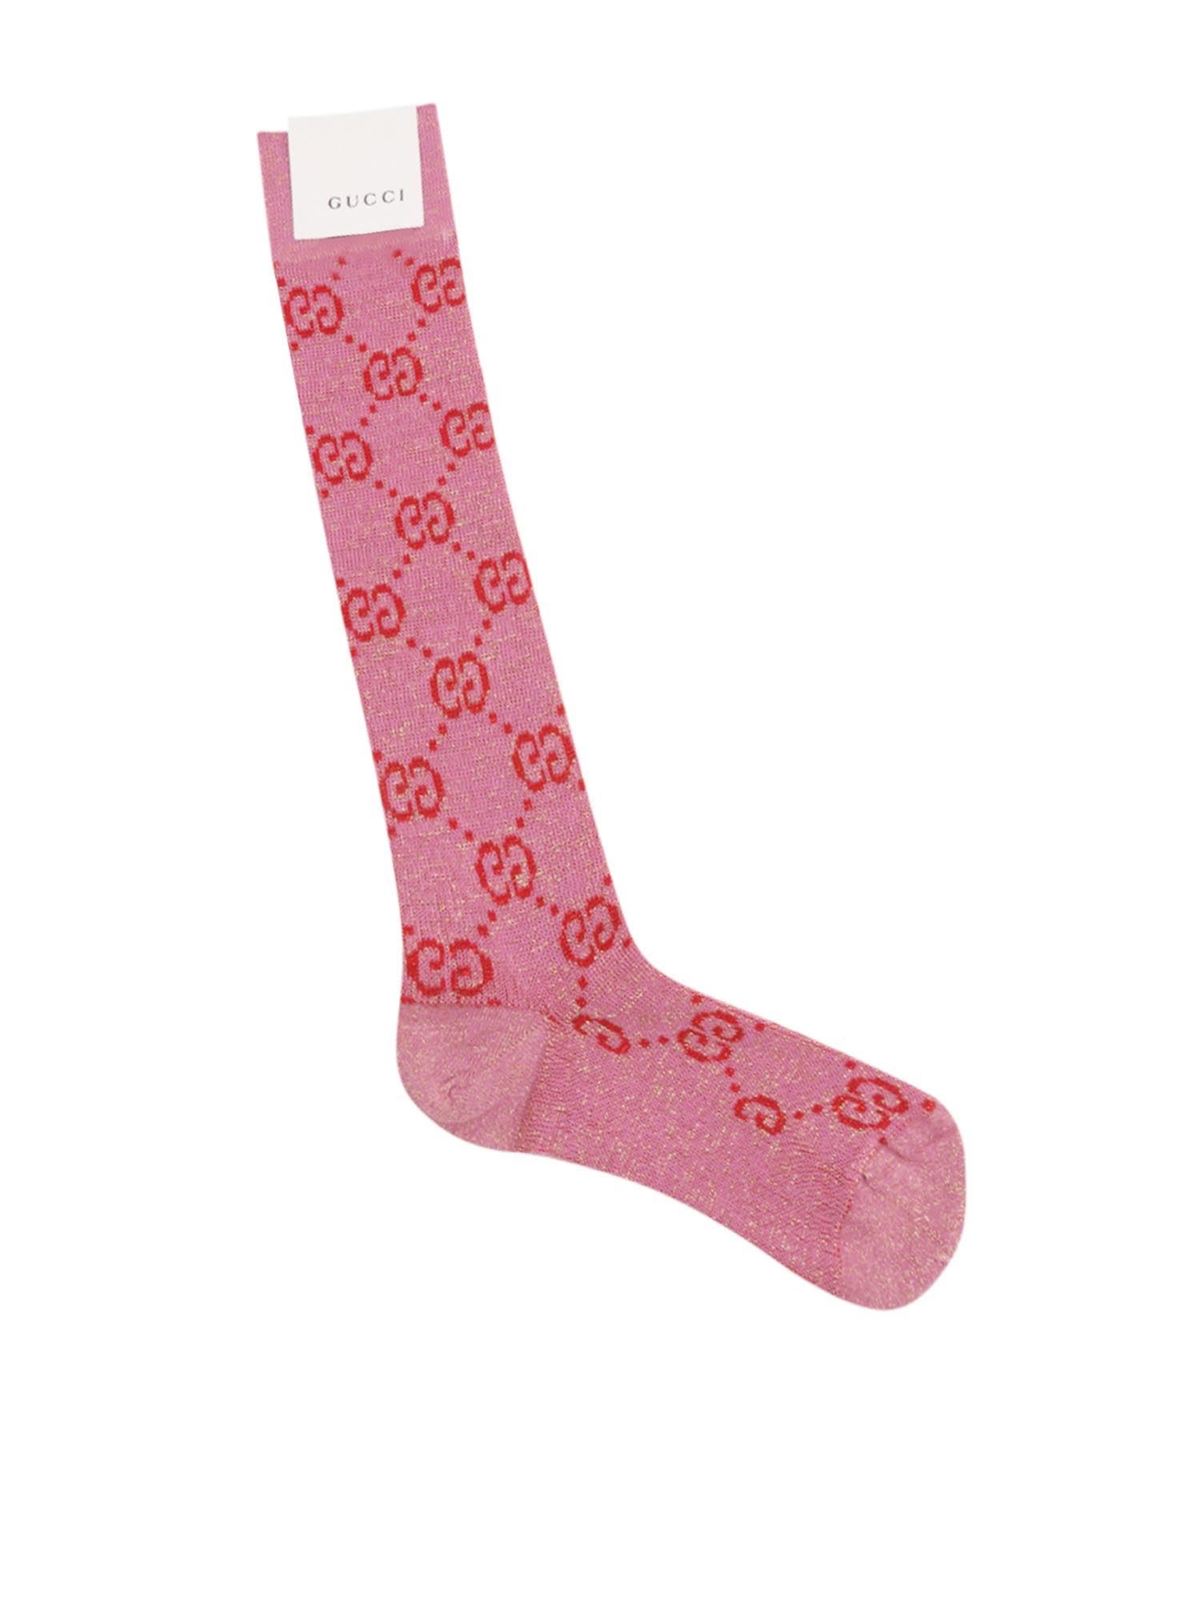 Socks Gucci - GG lamé socks in pink - 4765253G1995872 